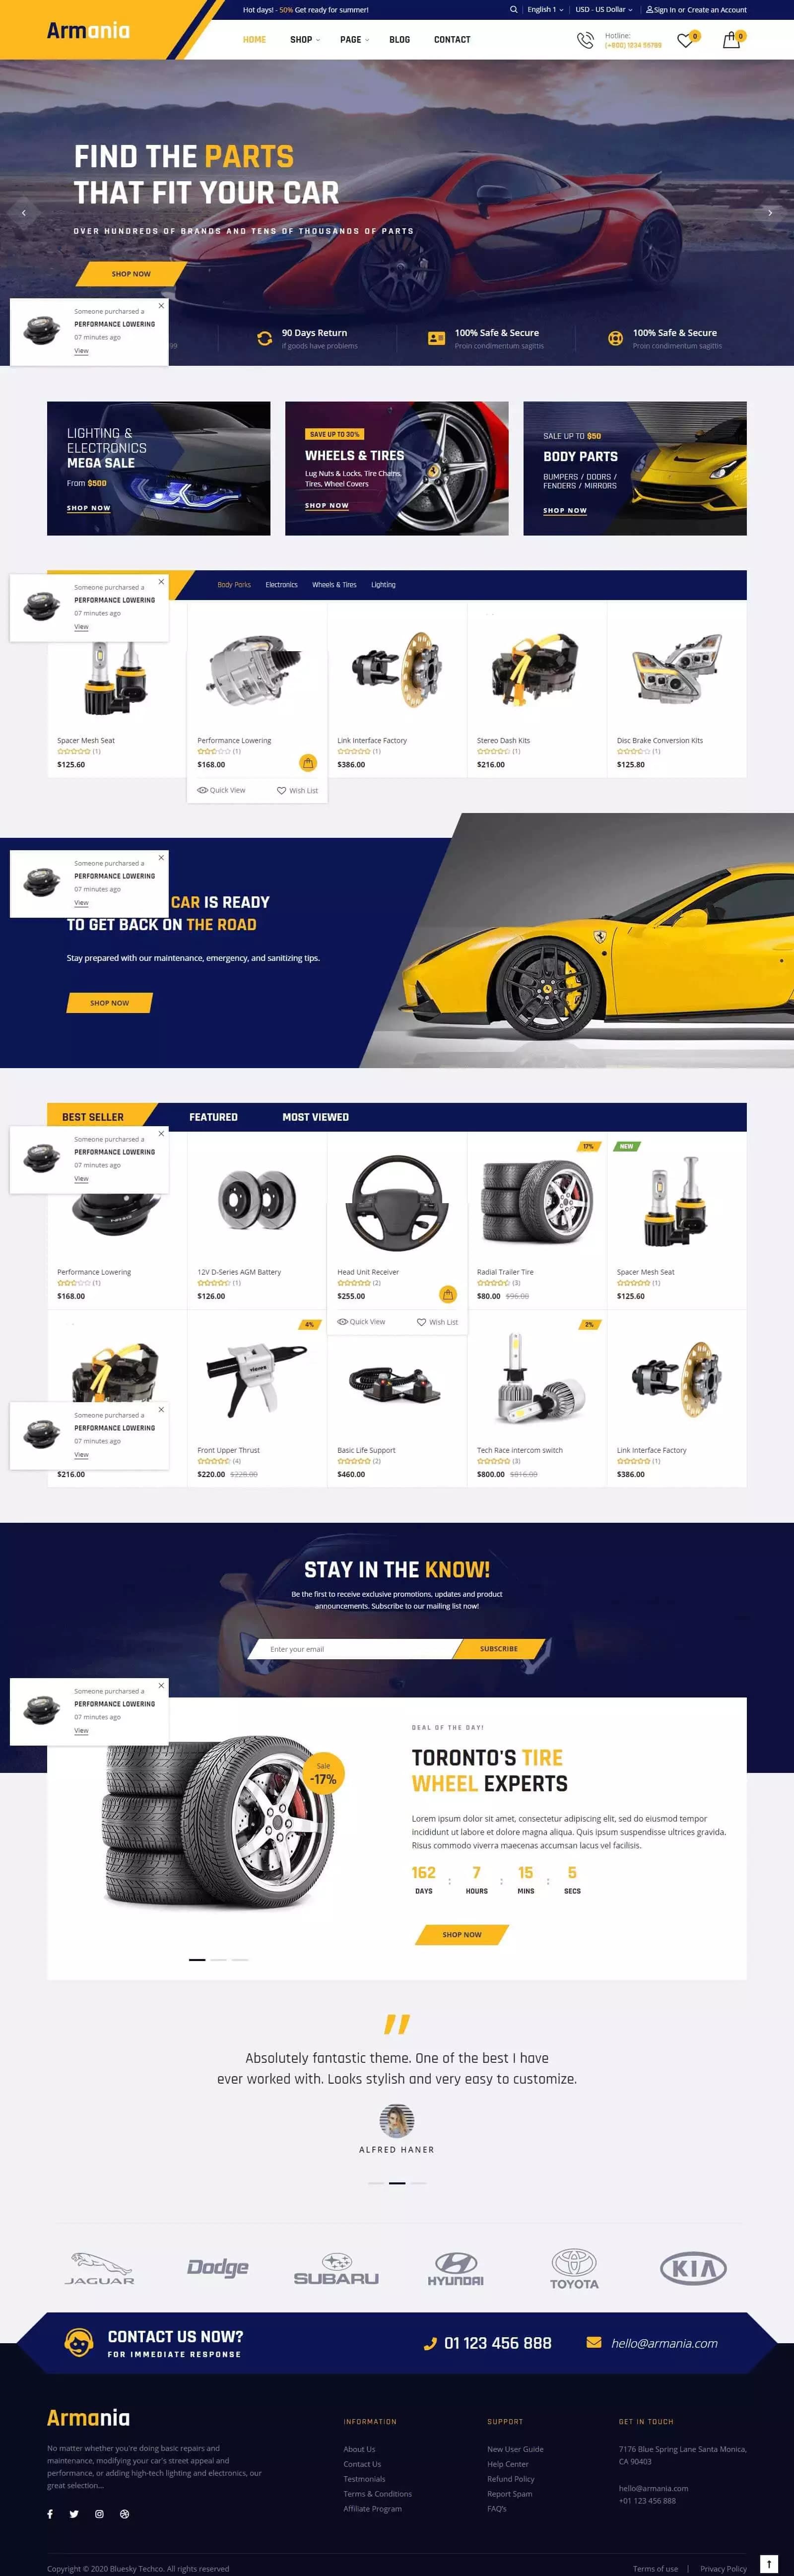 e-commerce website portfolio